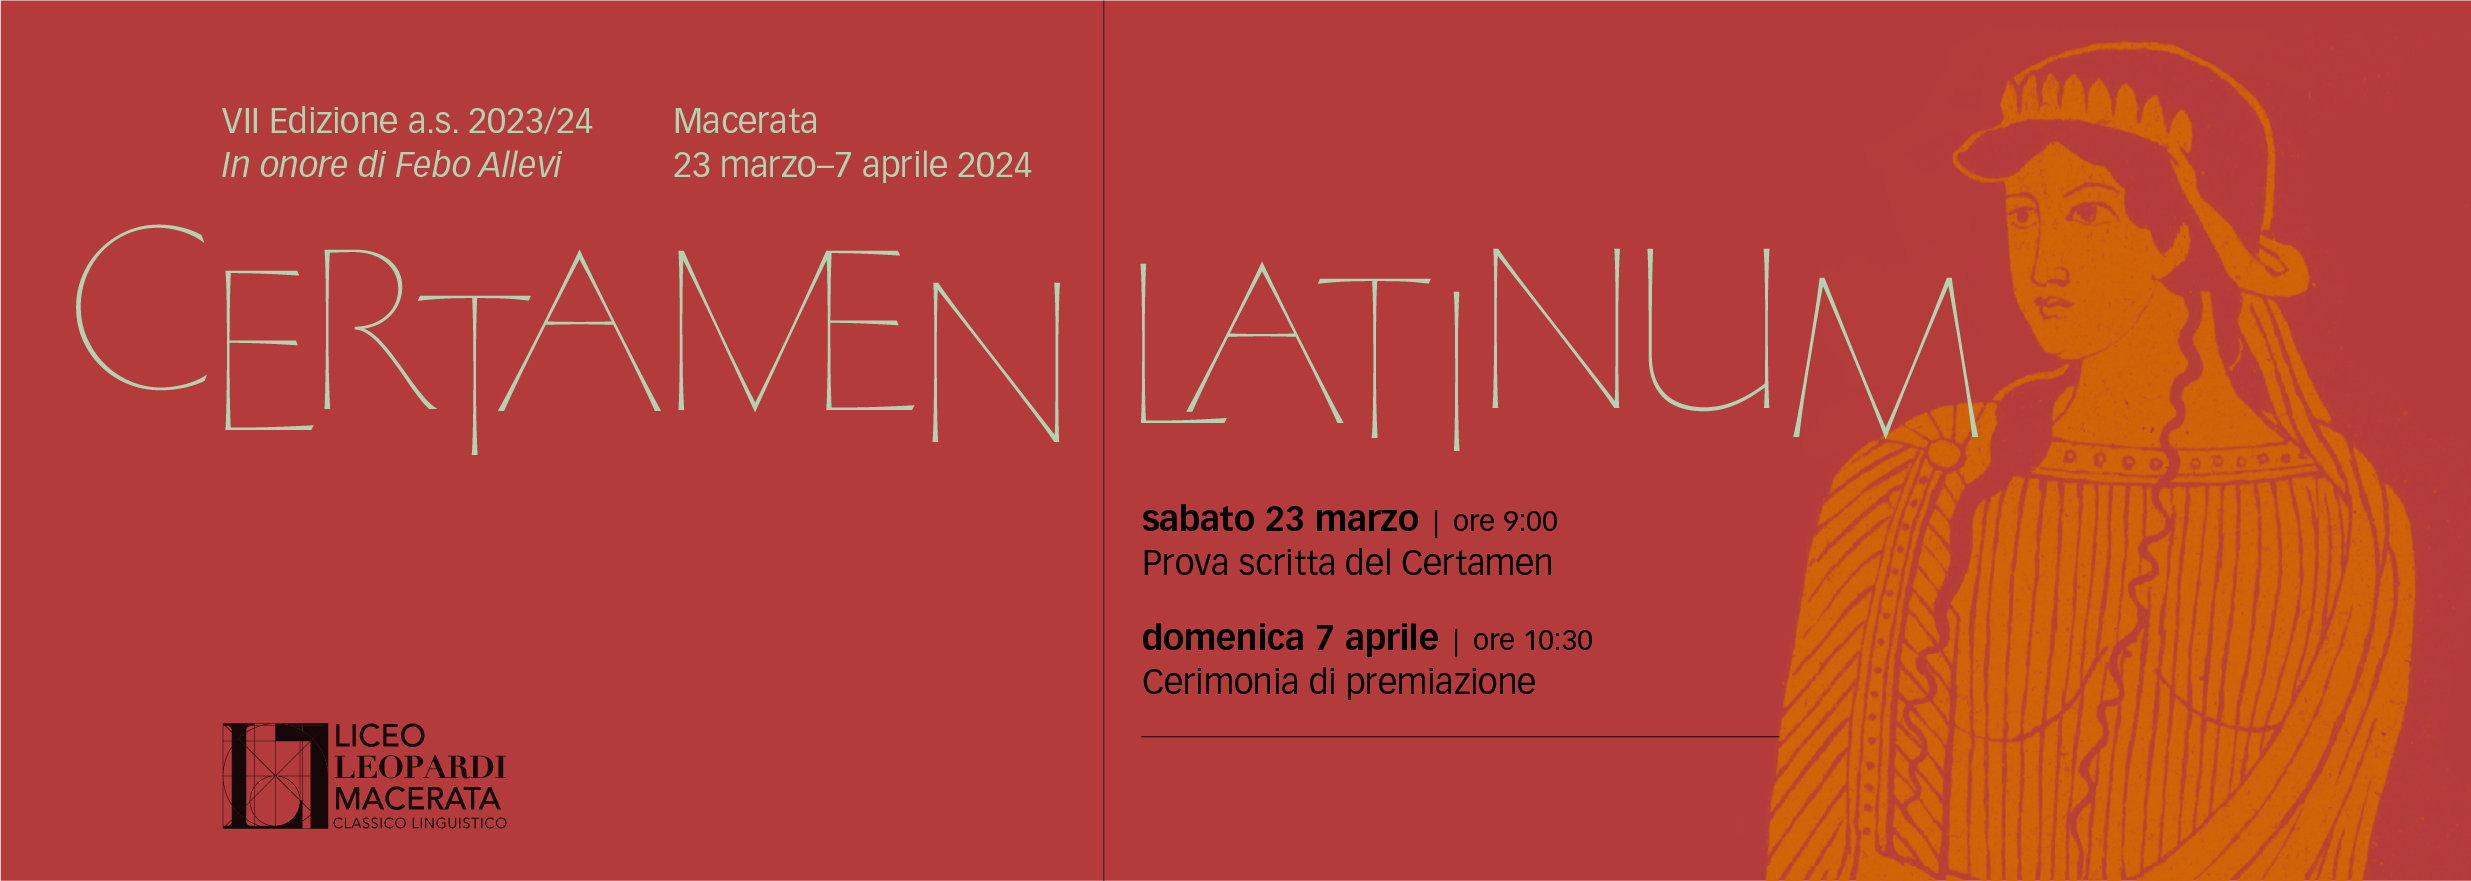 Certamen Latinum - VII Edizione 2024 - Liceo Statale G. Leopardi Macerata